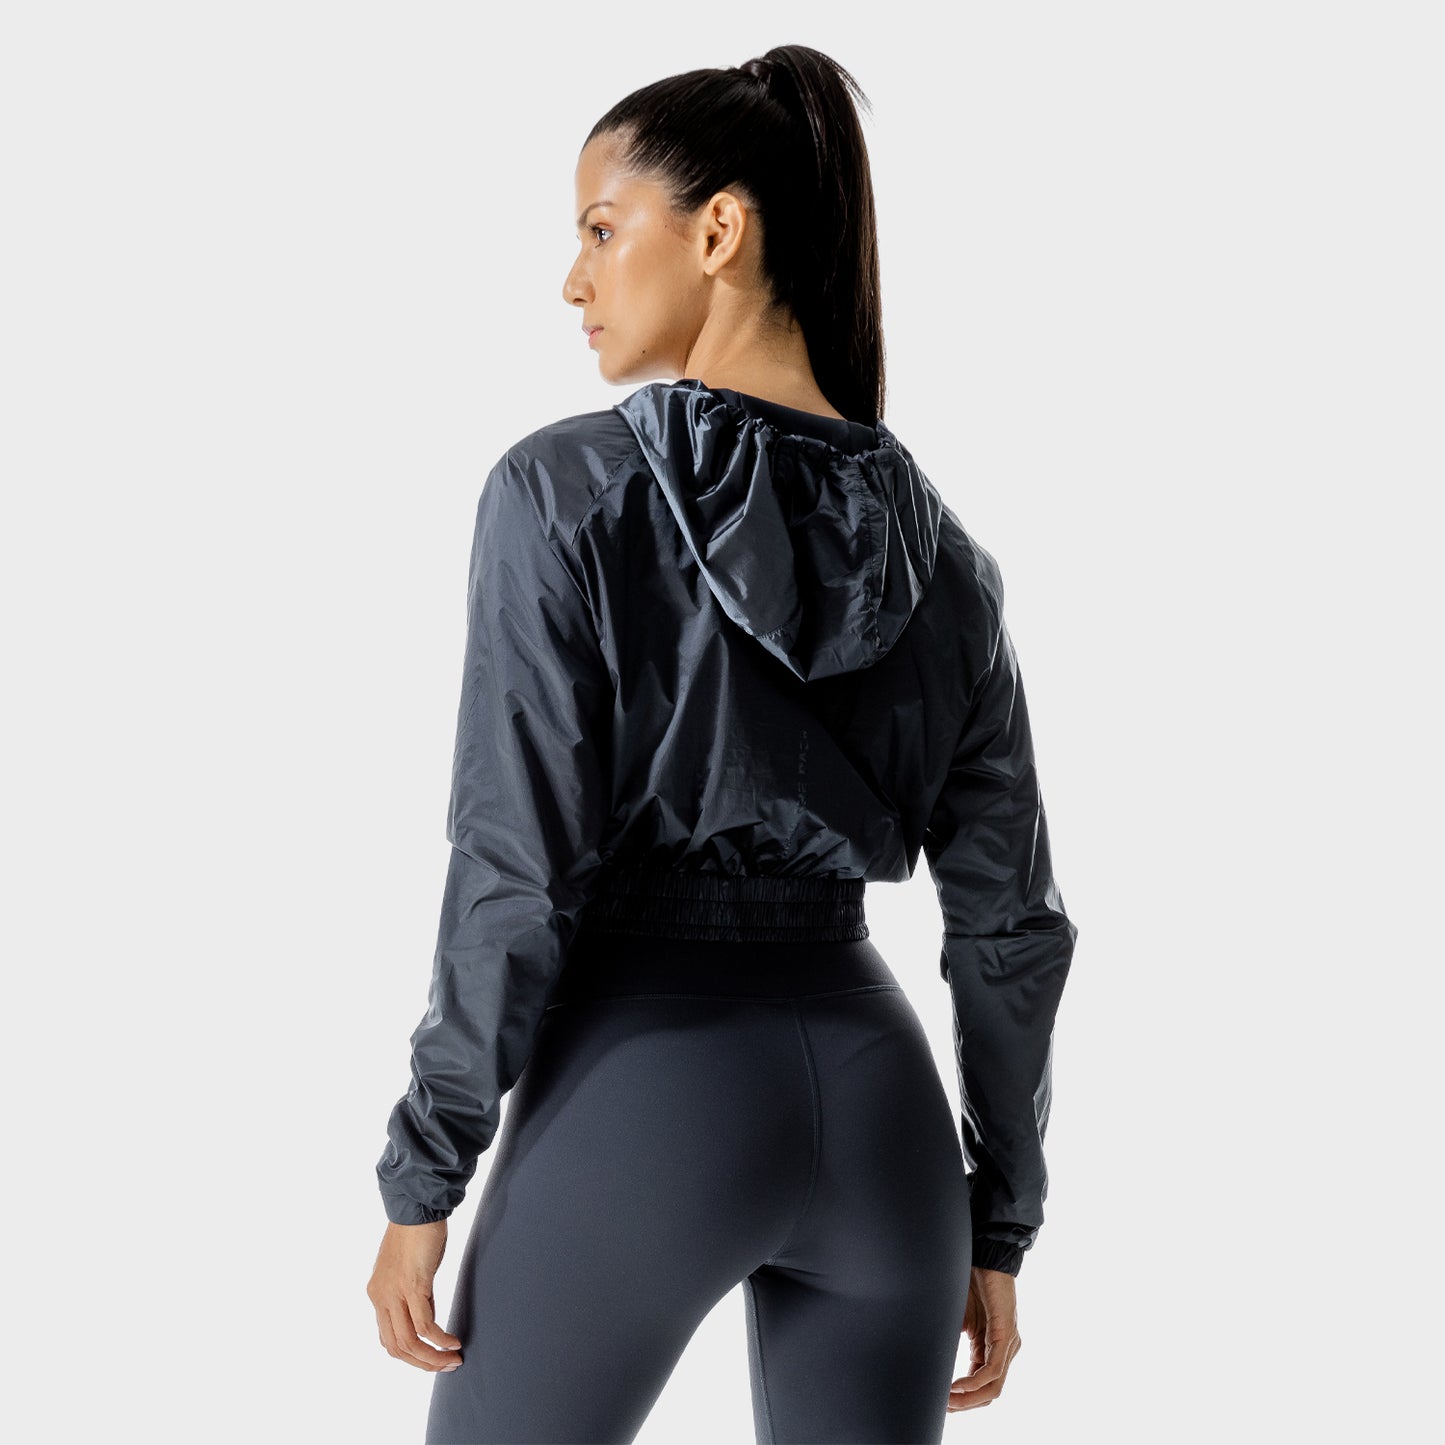 squatwolf-gym-hoodies-women-lab-360-crop-jacket-blue-nights-workout-clothes